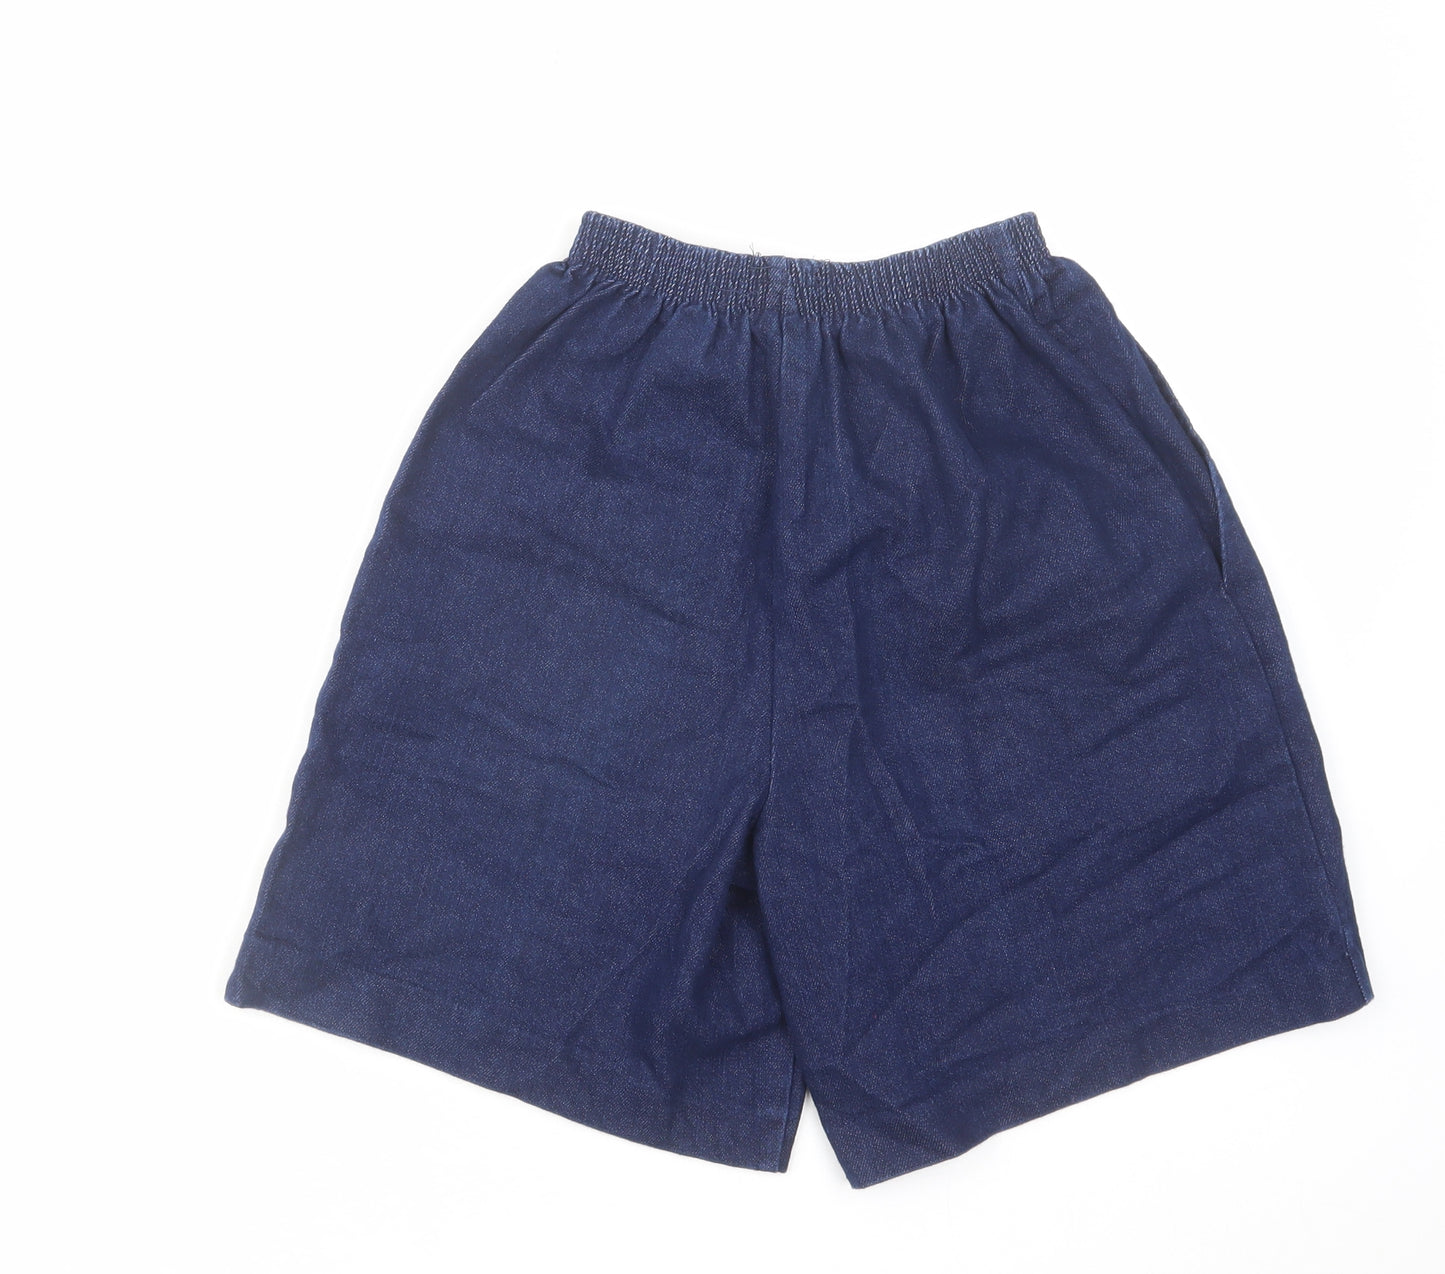 Pam's Closet Womens Blue Cotton Bermuda Shorts Size 8 L8 in Regular Pull On